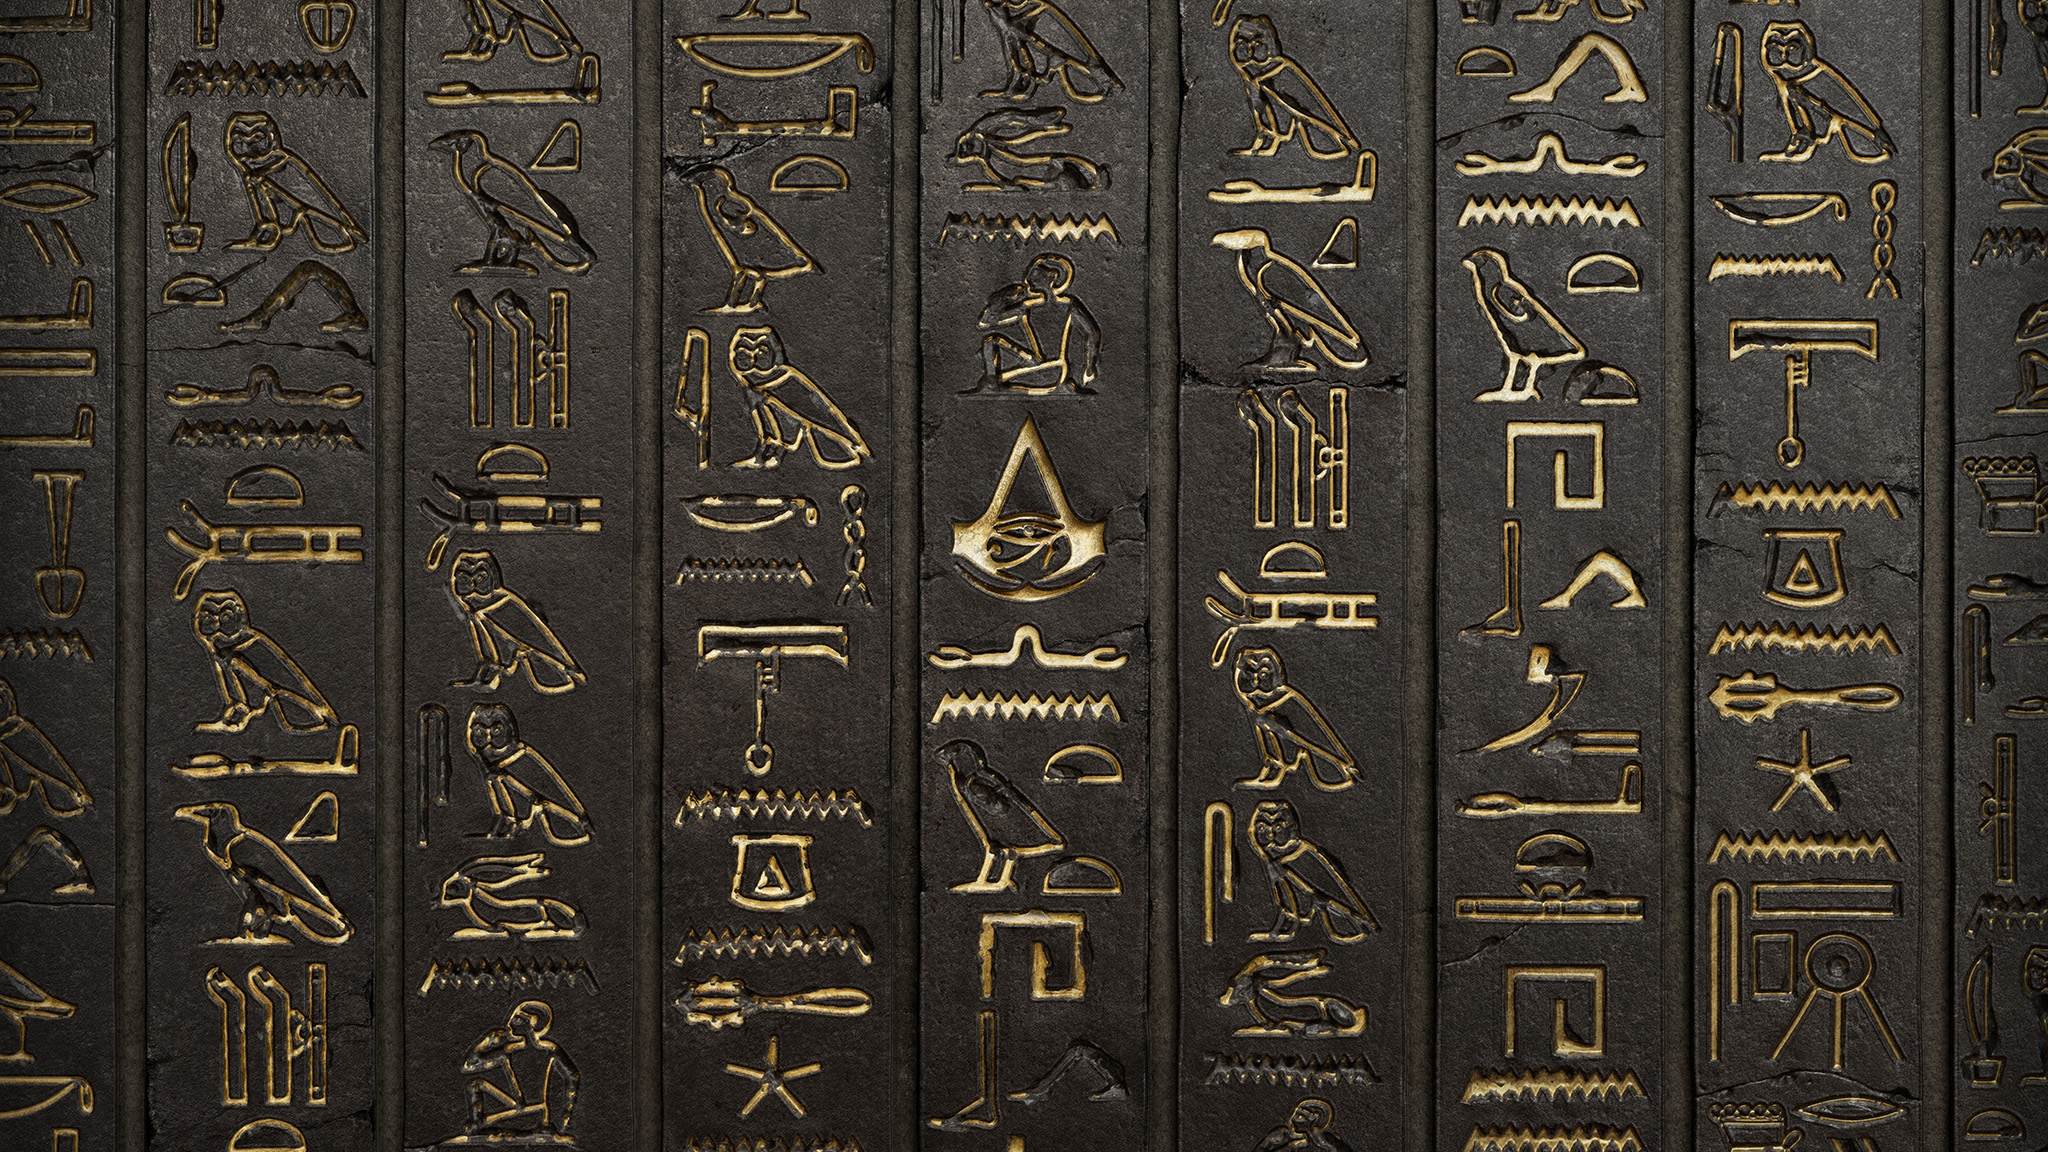 General 2048x1152 Assassin's Creed hieroglyphs wall video games digital art Assassin's Creed: Origins